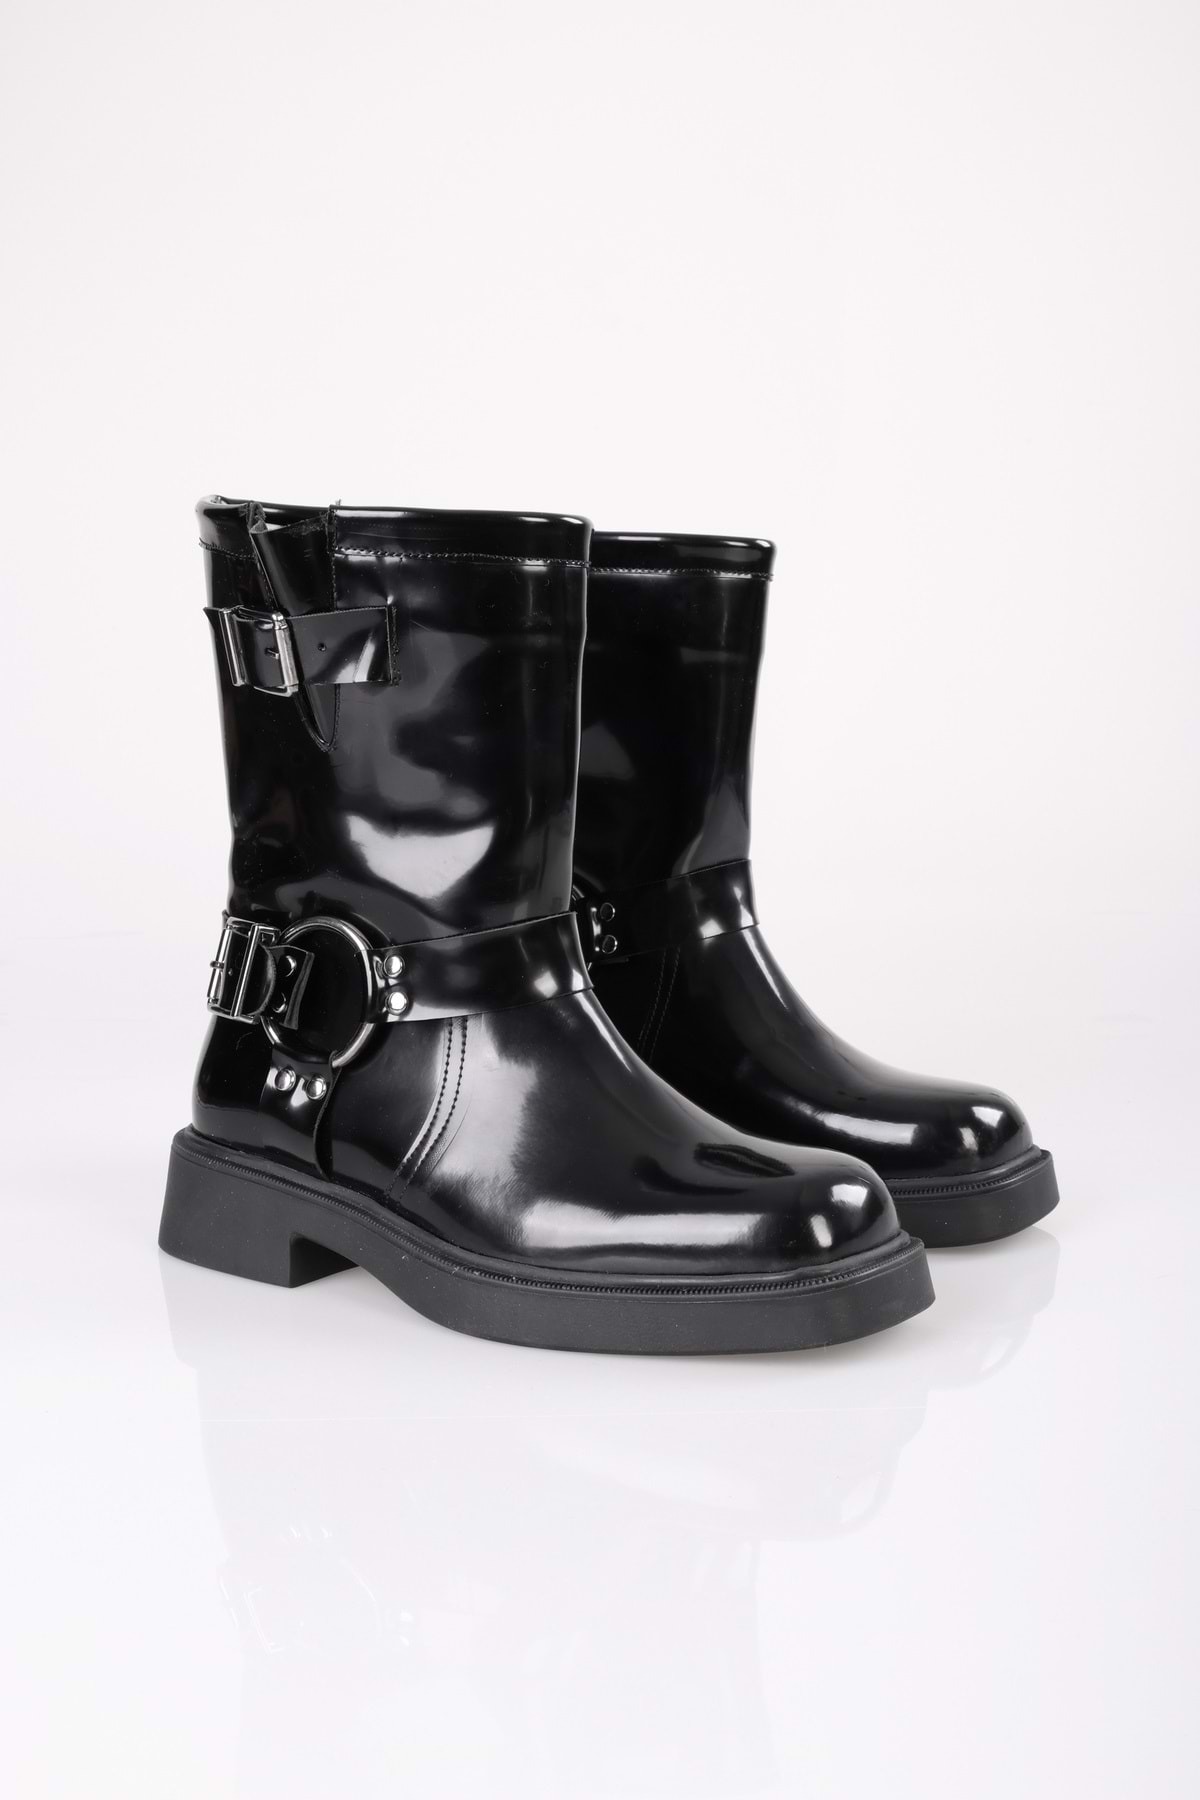 Levně Shoeberry Women's Brocks Black Patent Leather Buckled Thick Sole Boots